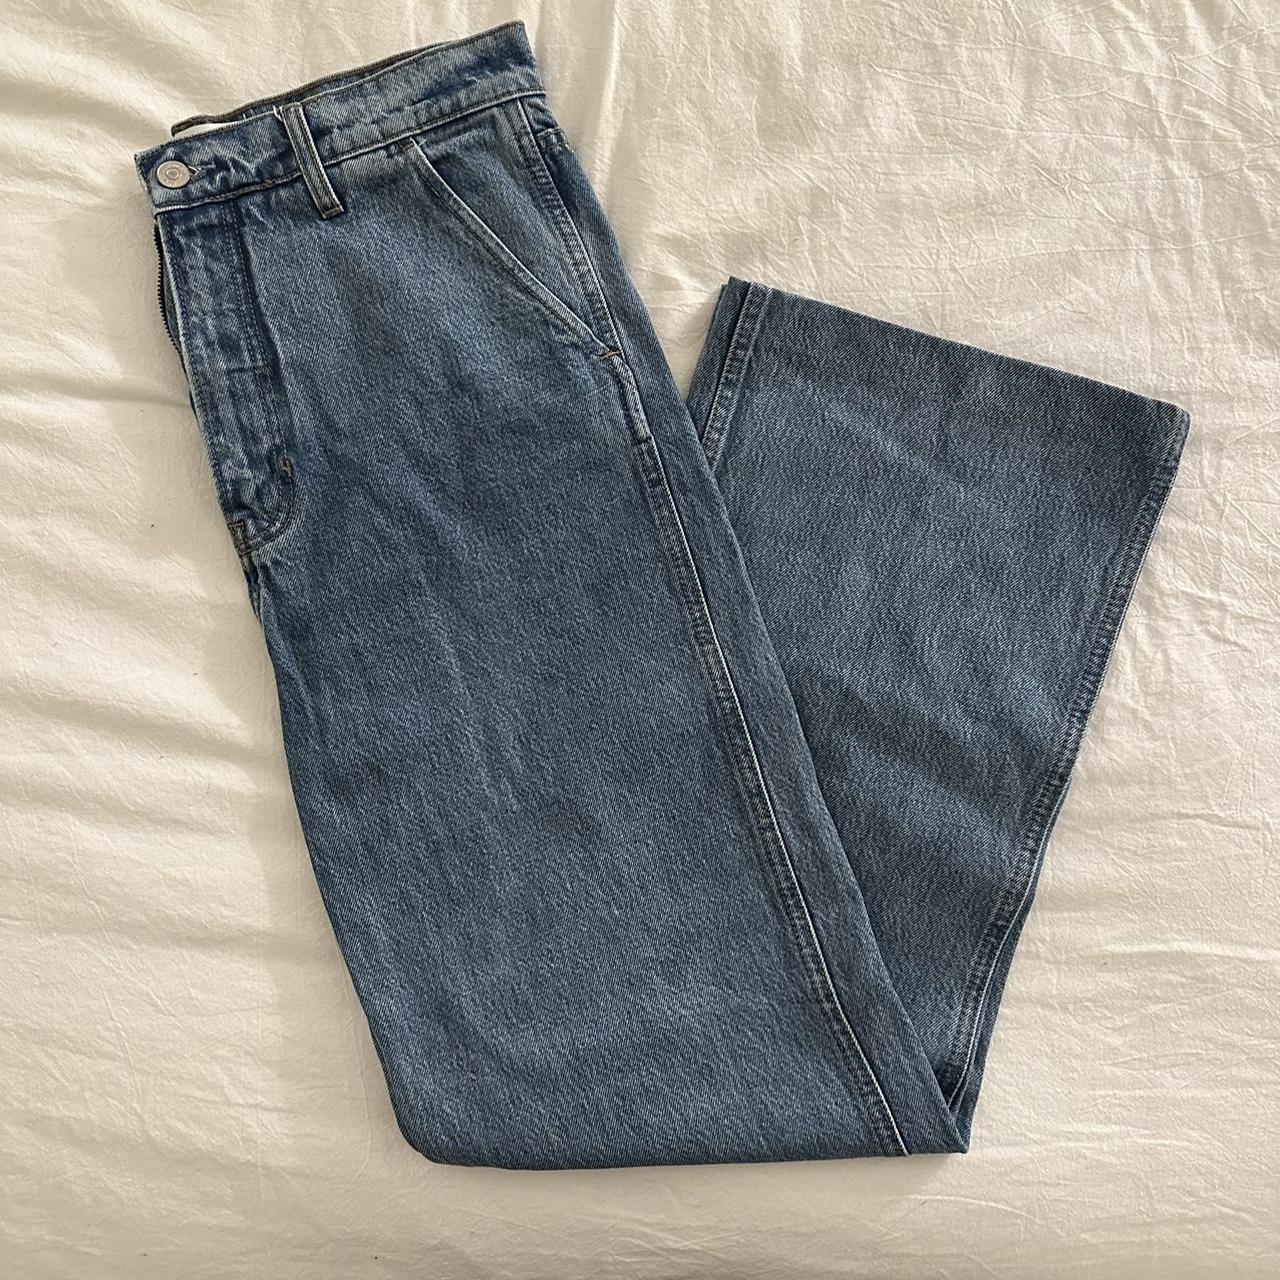 Reformation Brynn Trouser Jeans details... - Depop